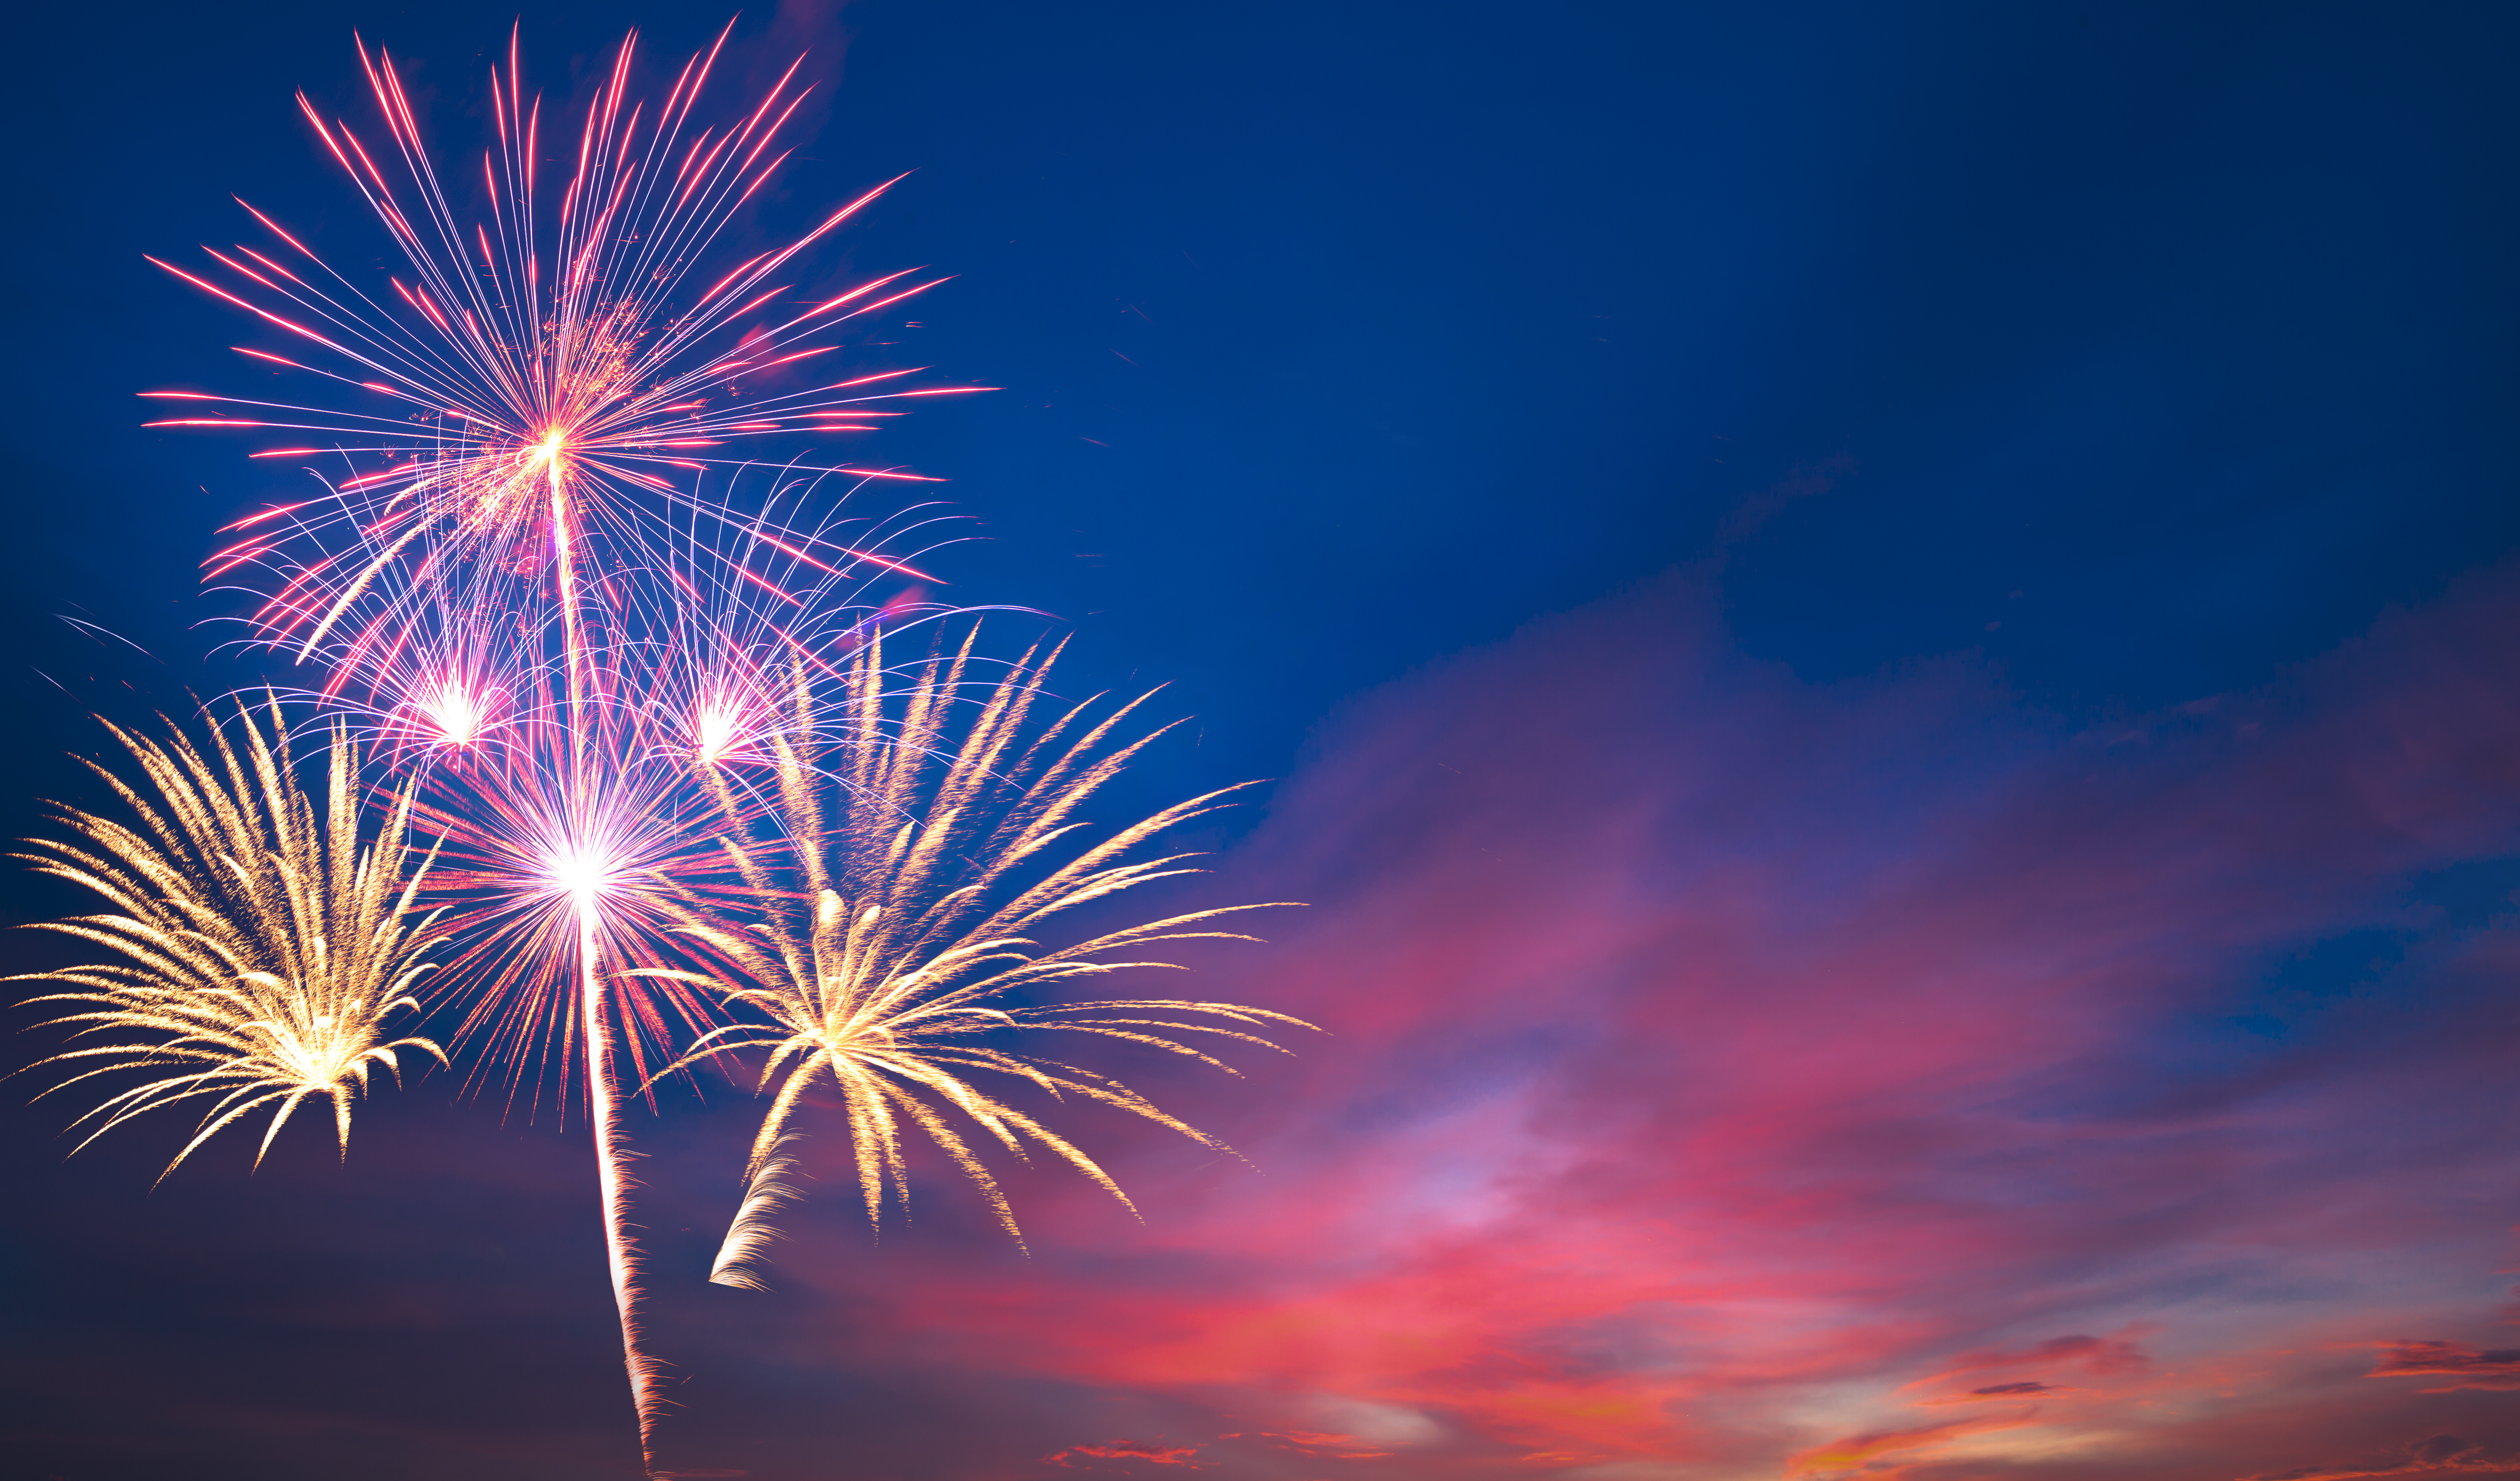 Independence Day Fireworks Tips & Tricks for Safety